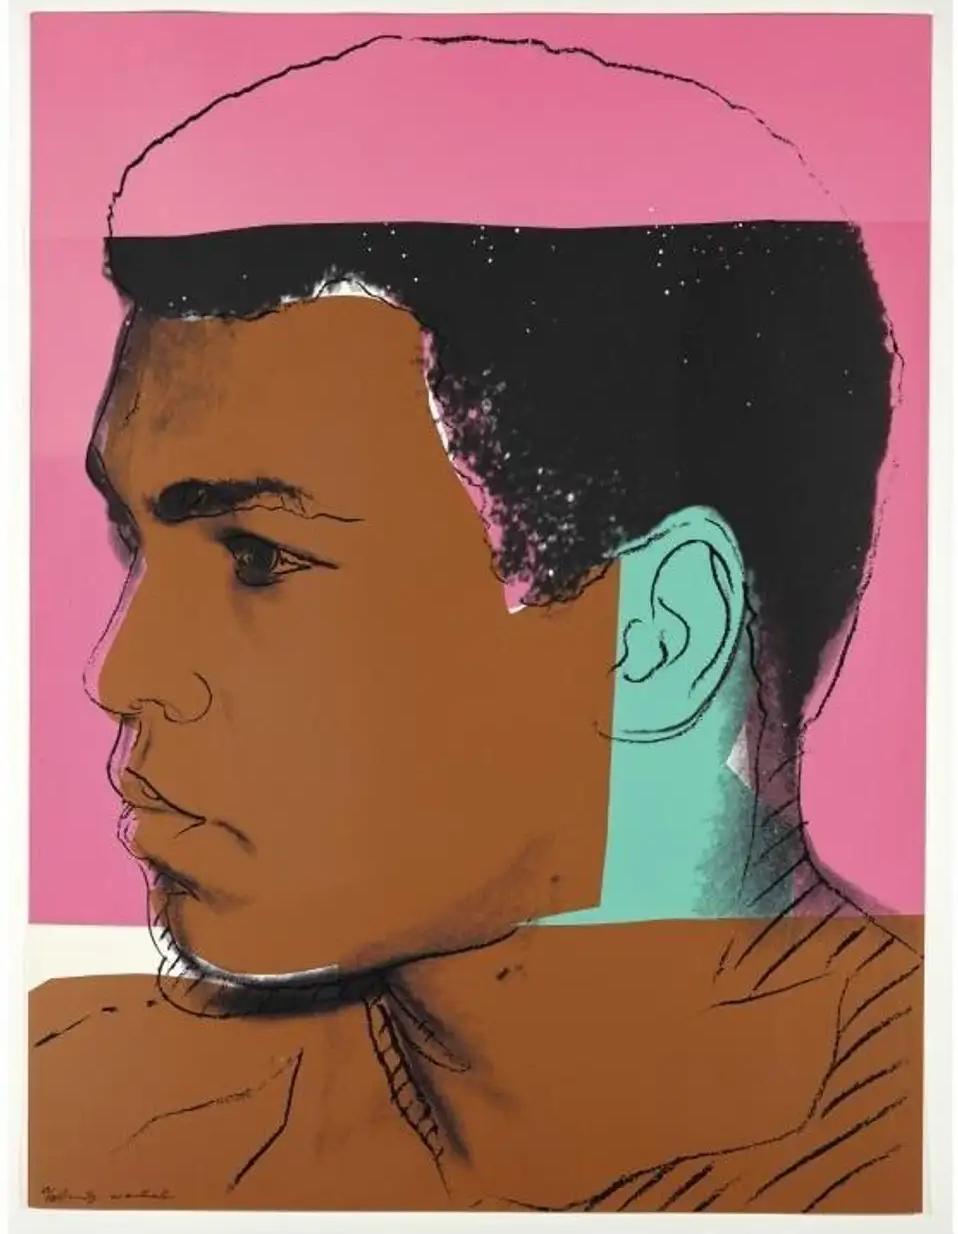 MUHAMMAD ALI (F. & S. II.179-182) - Print by Andy Warhol